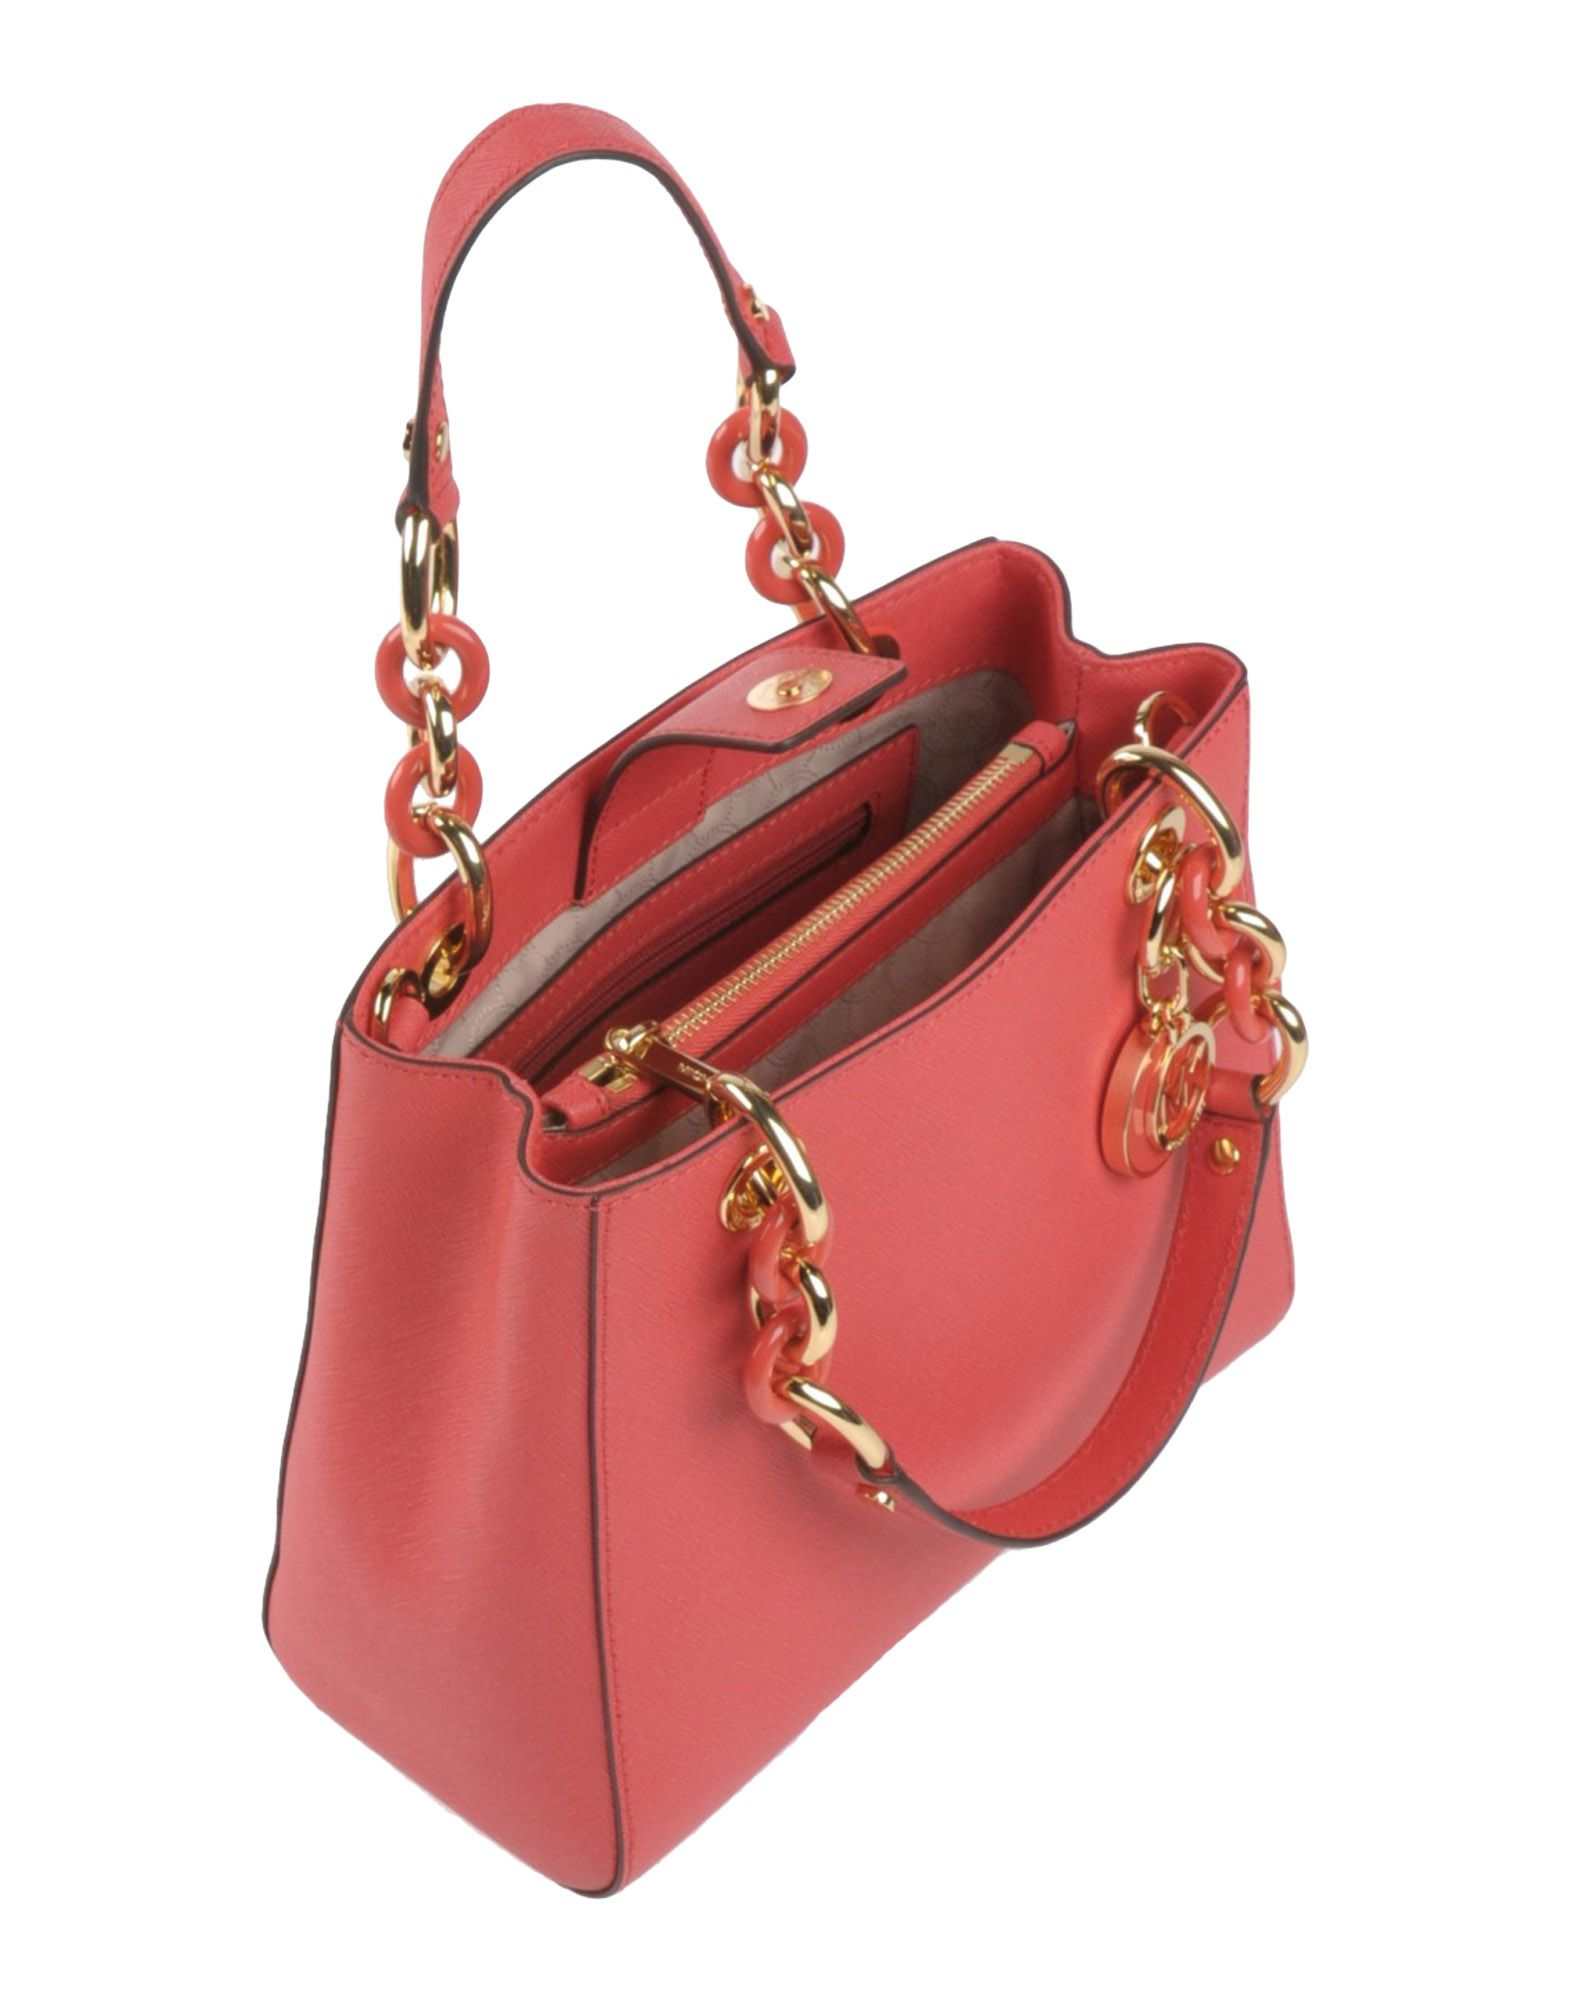 MICHAEL Michael Kors Handbag in Coral (Pink) - Lyst